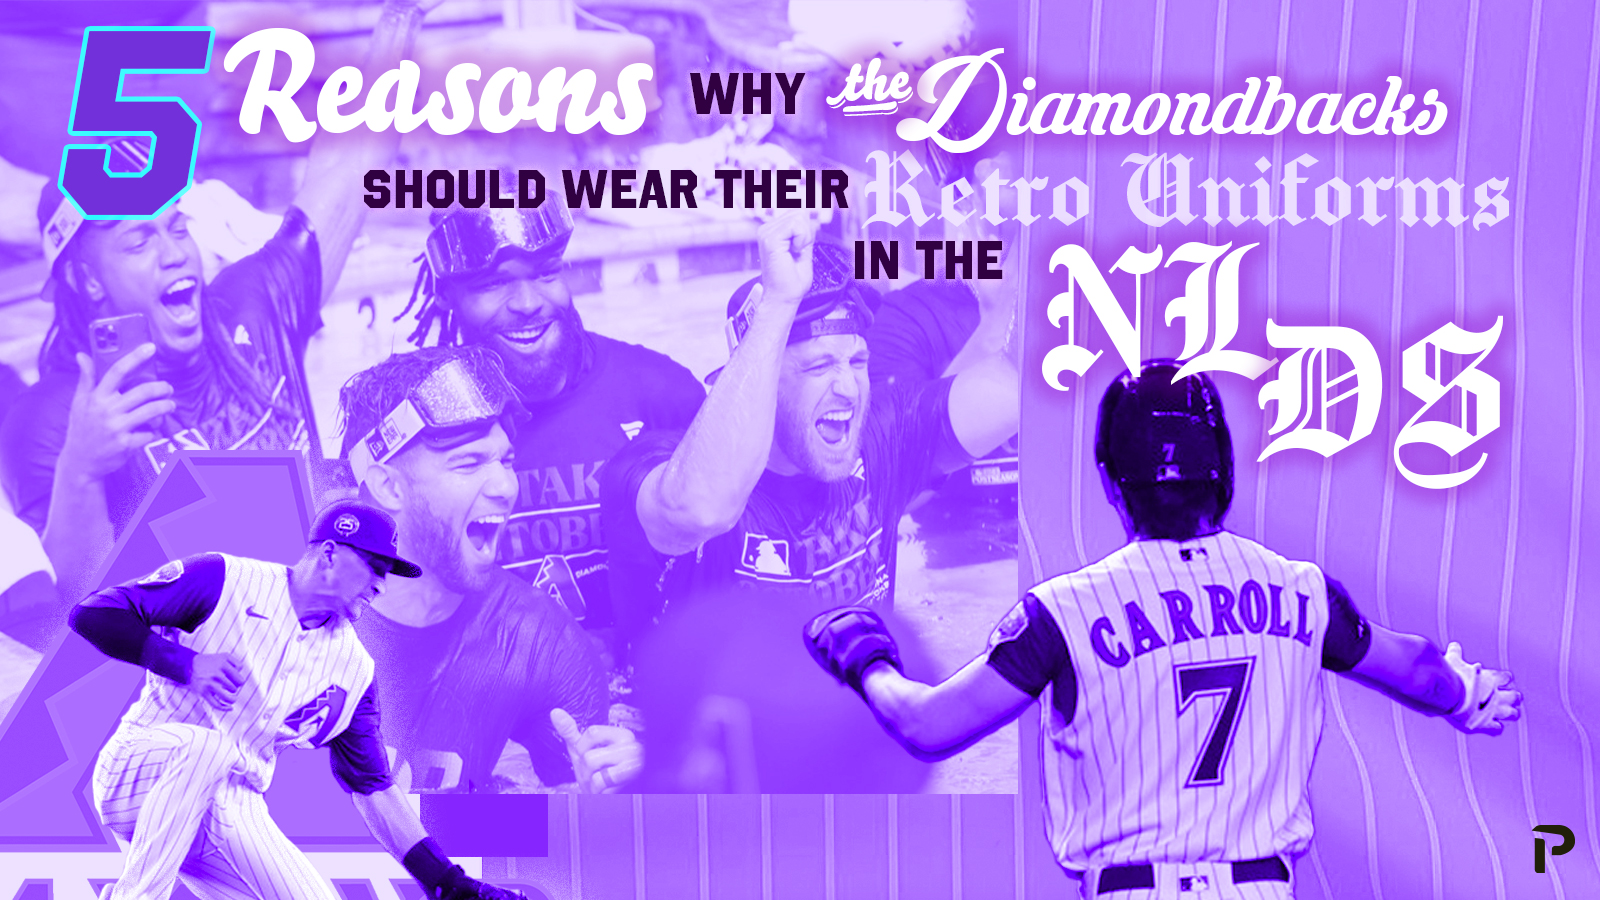 Arizona Diamondbacks should return to the purple and teal uniforms